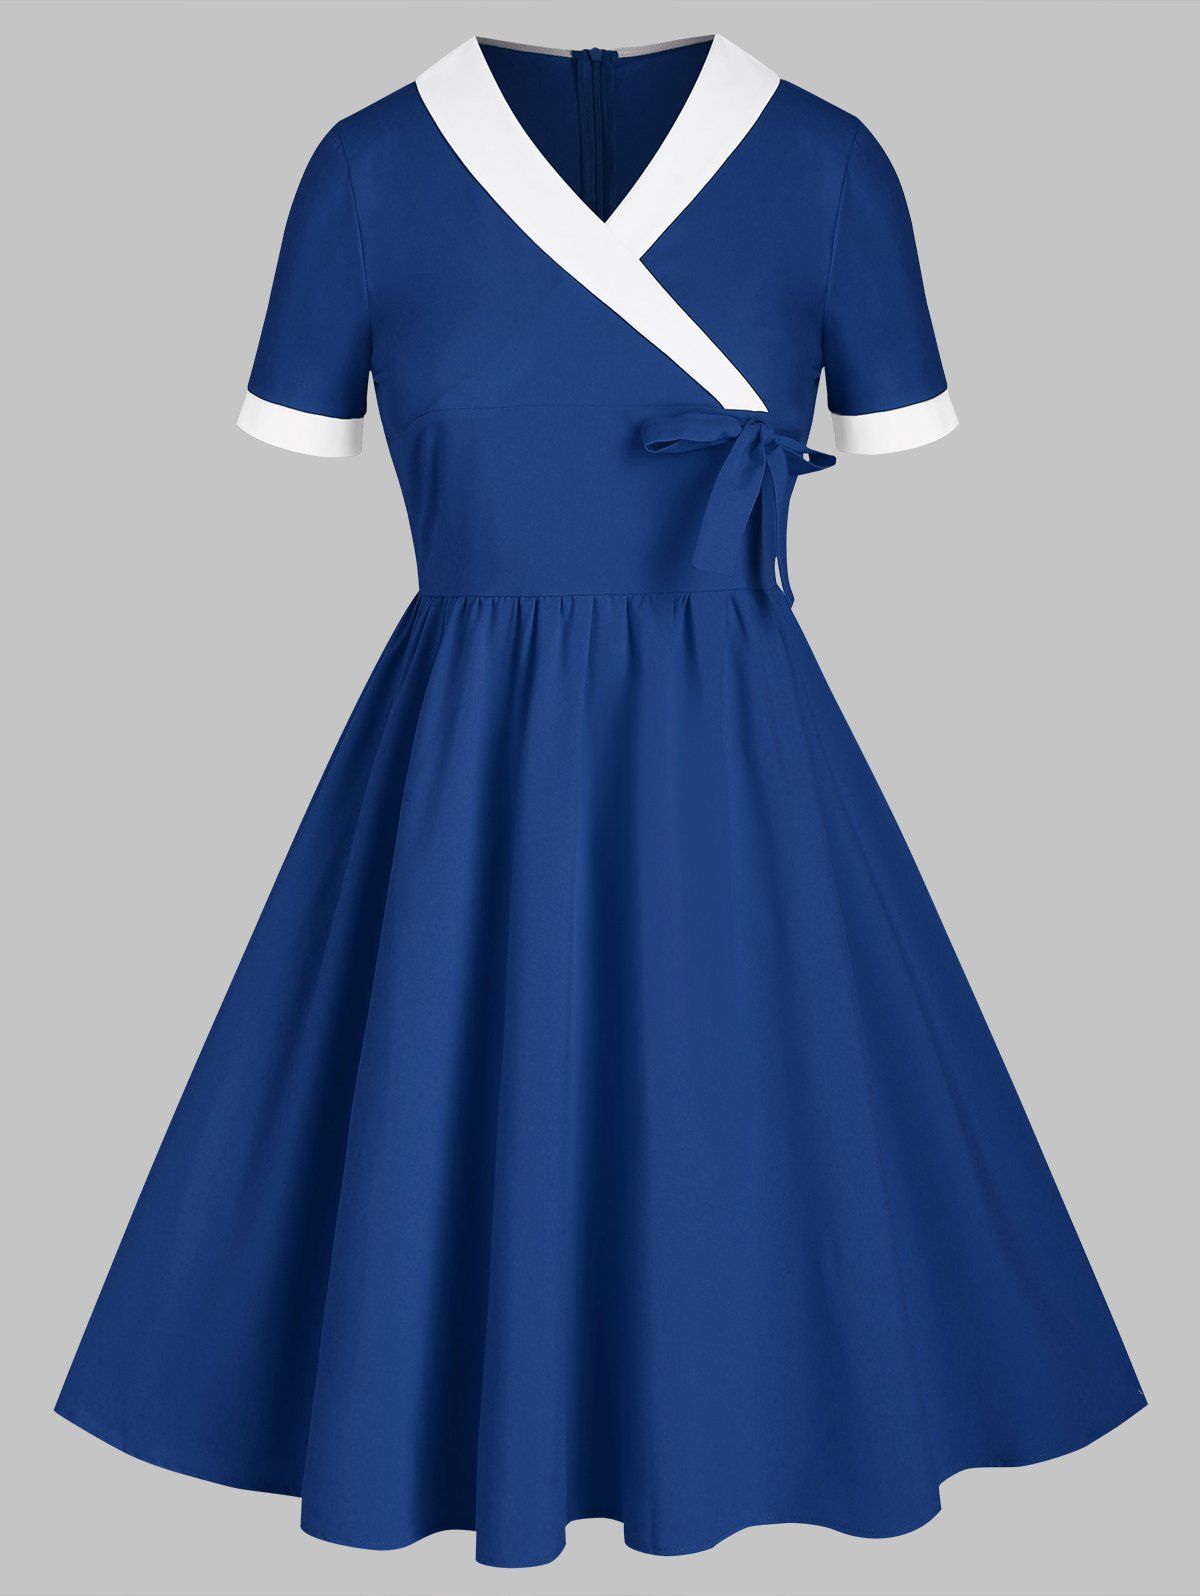 Vintage Two Tone A Line Dress Shawl Collar Surplice Bowknot Short Sleeve Dress - DEEP BLUE S